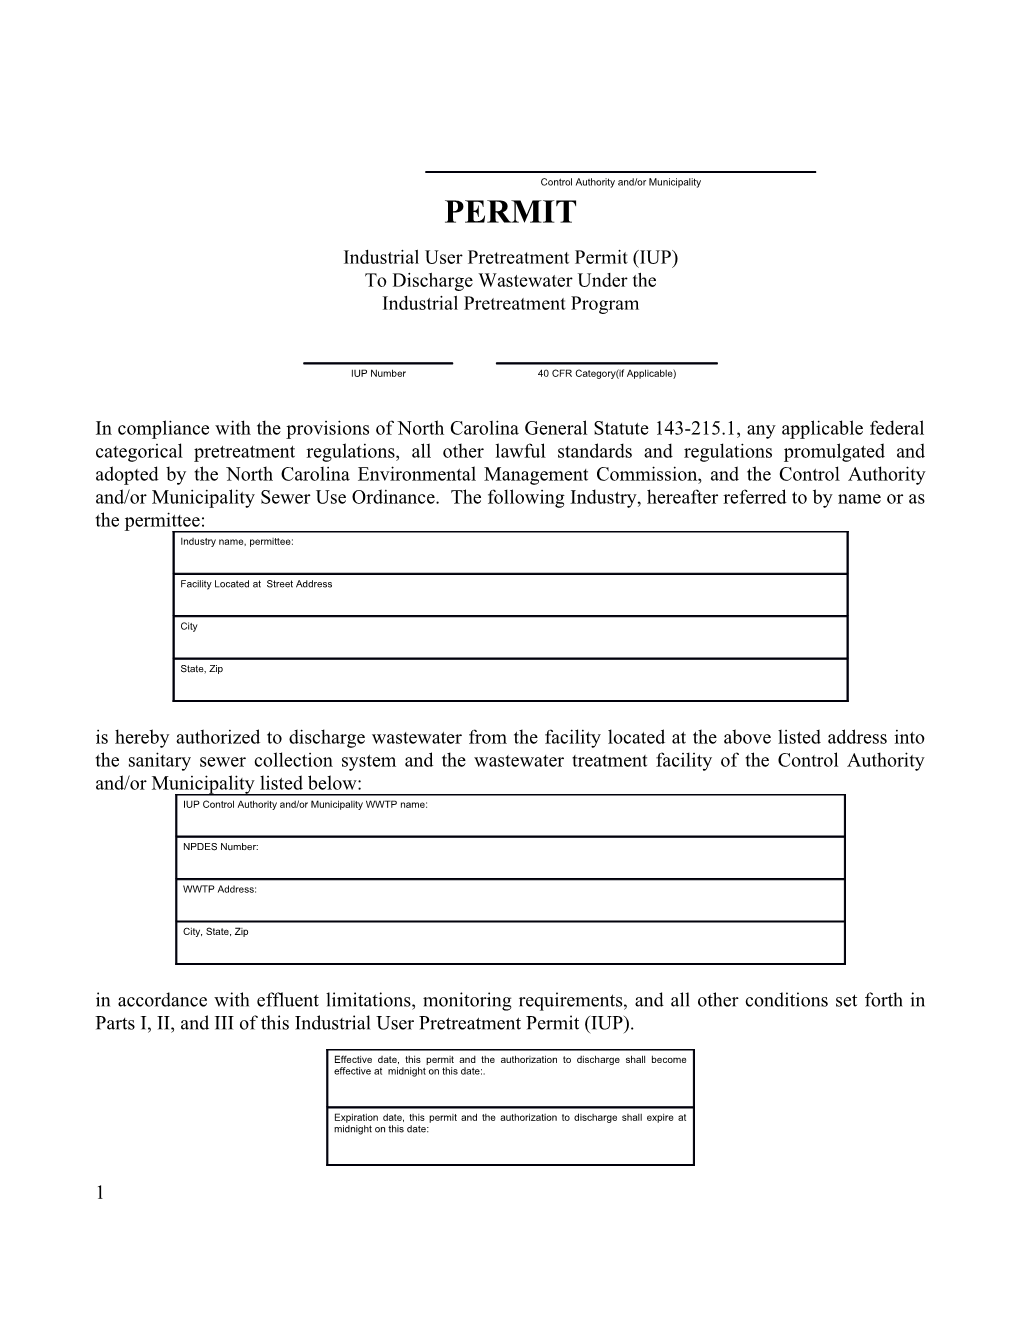 Industrial User Pretreatment Permit (IUP)